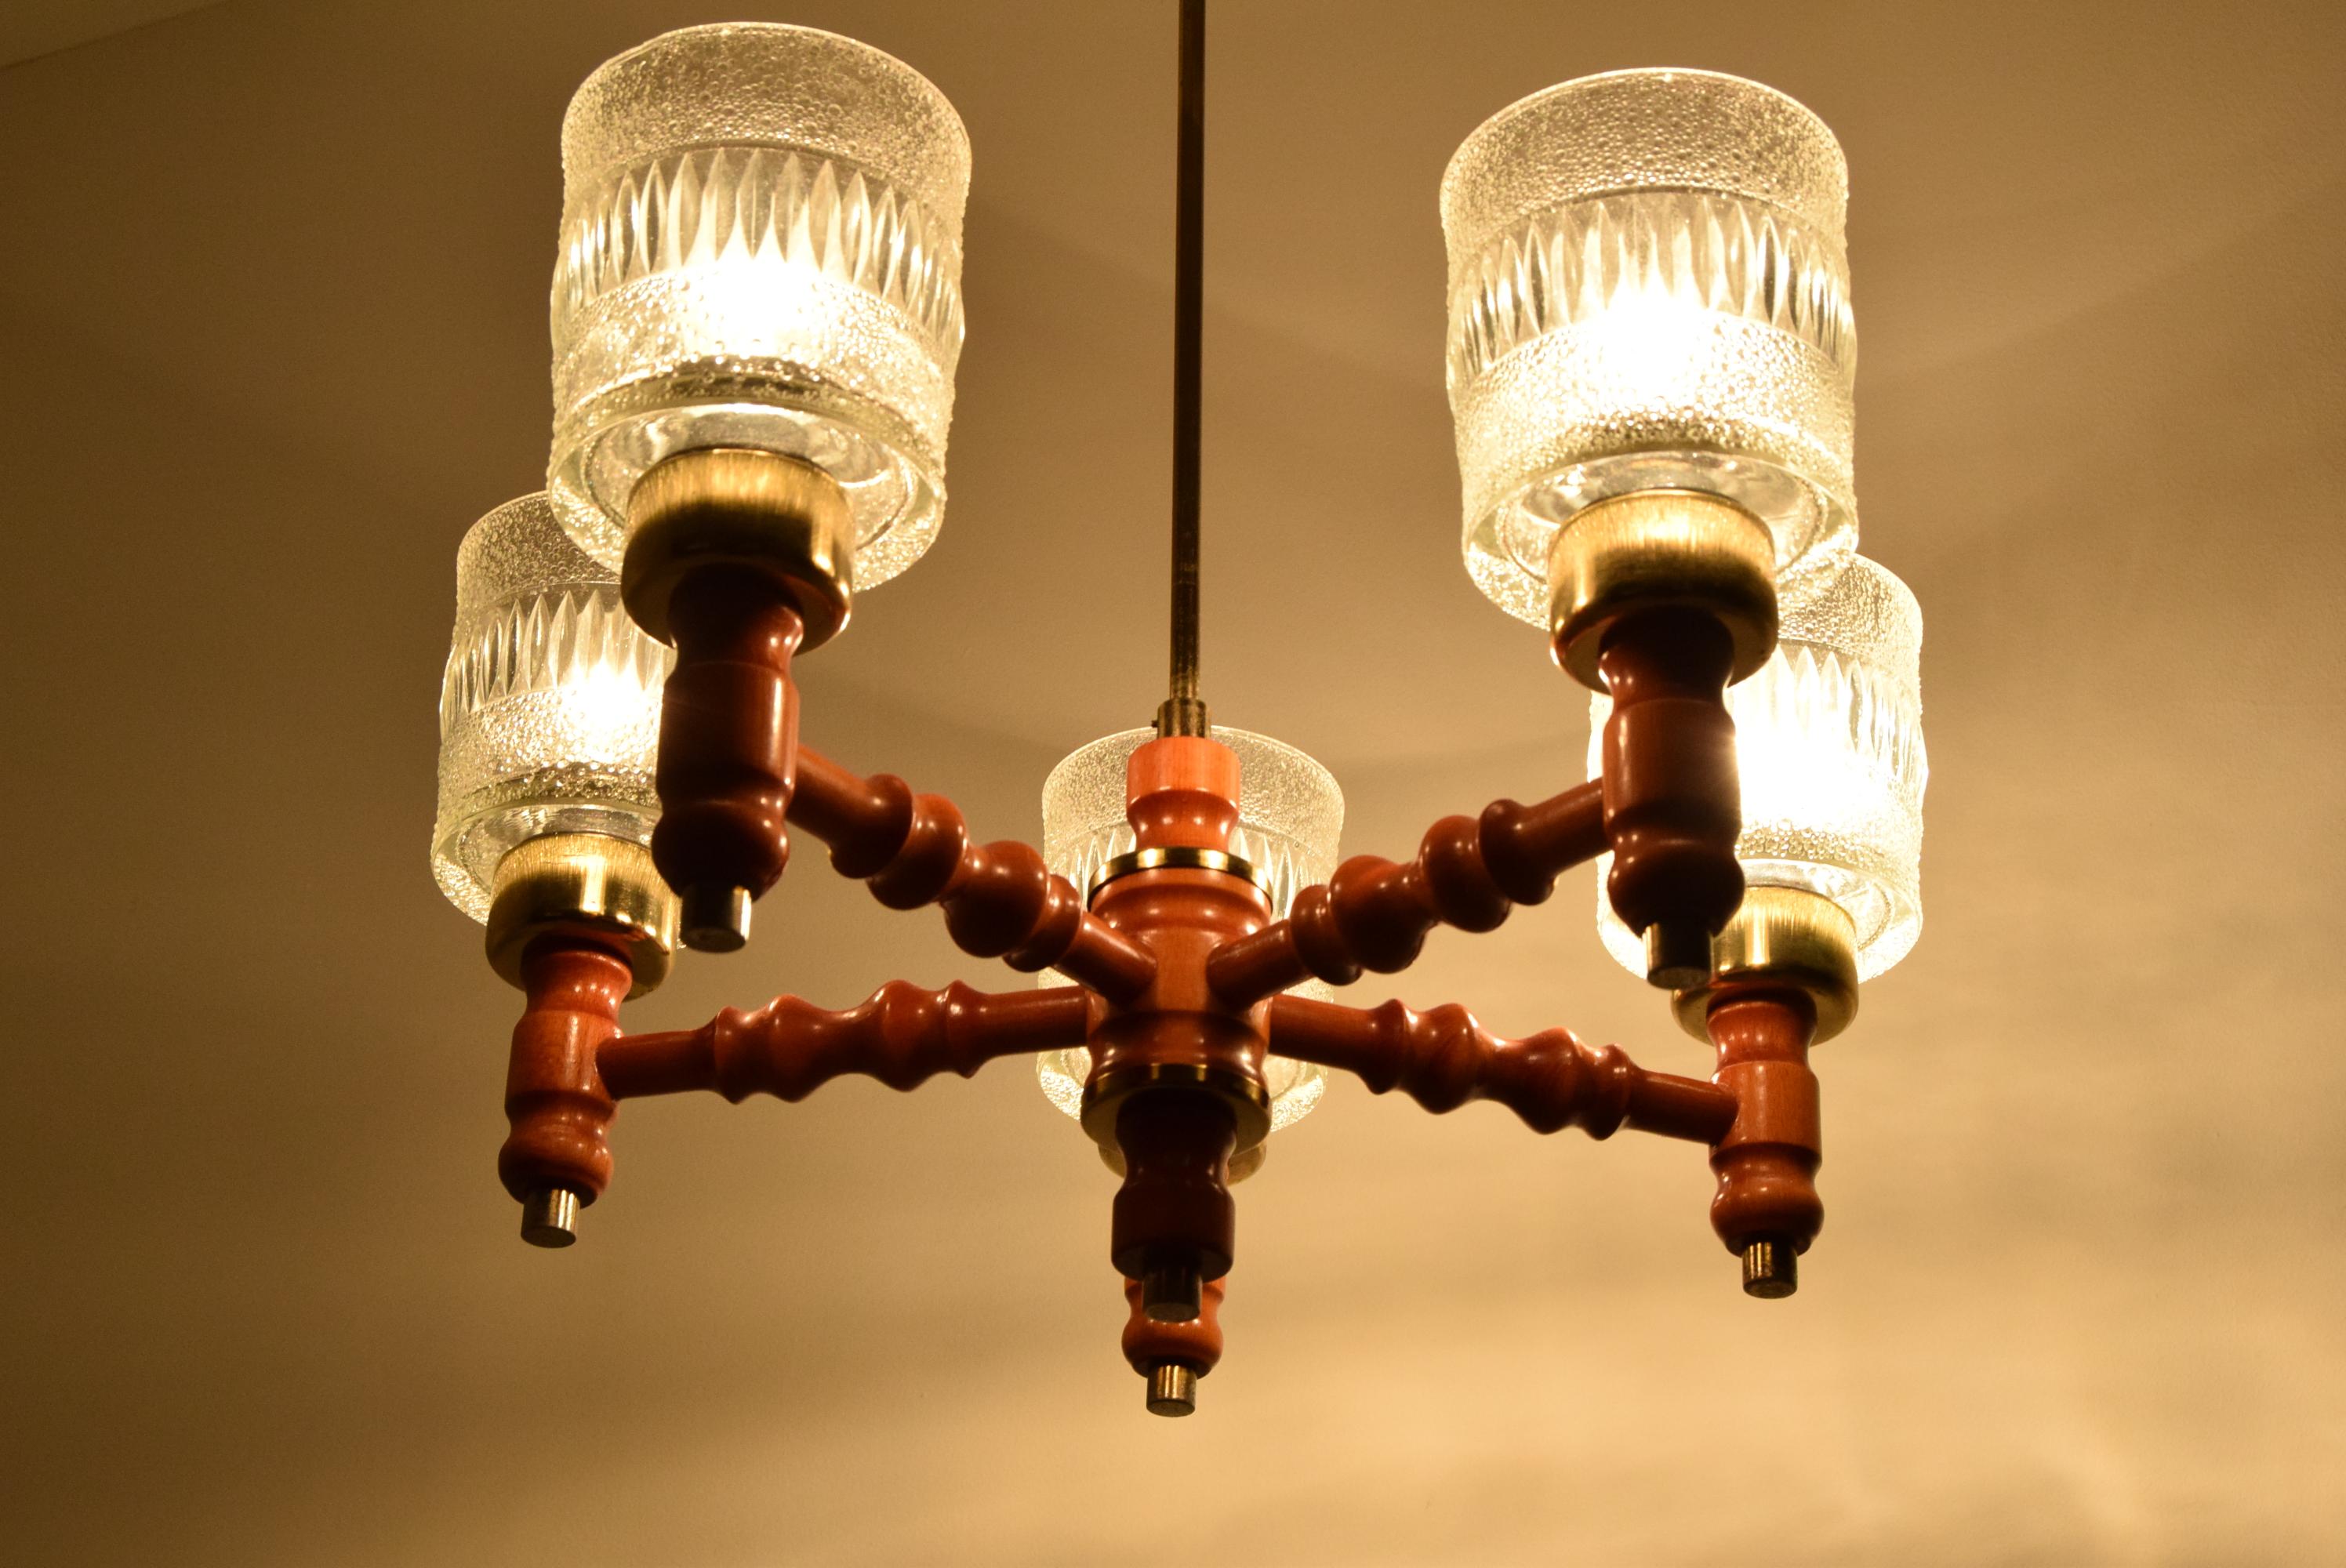 Hergestellt in der Tschechoslowakei
Hergestellt aus Glas, Holz, Messing
5x60W, E27 oder E26 Glühbirne
Neu poliert
Guter Originalzustand
US-Verkabelung kompatibel.